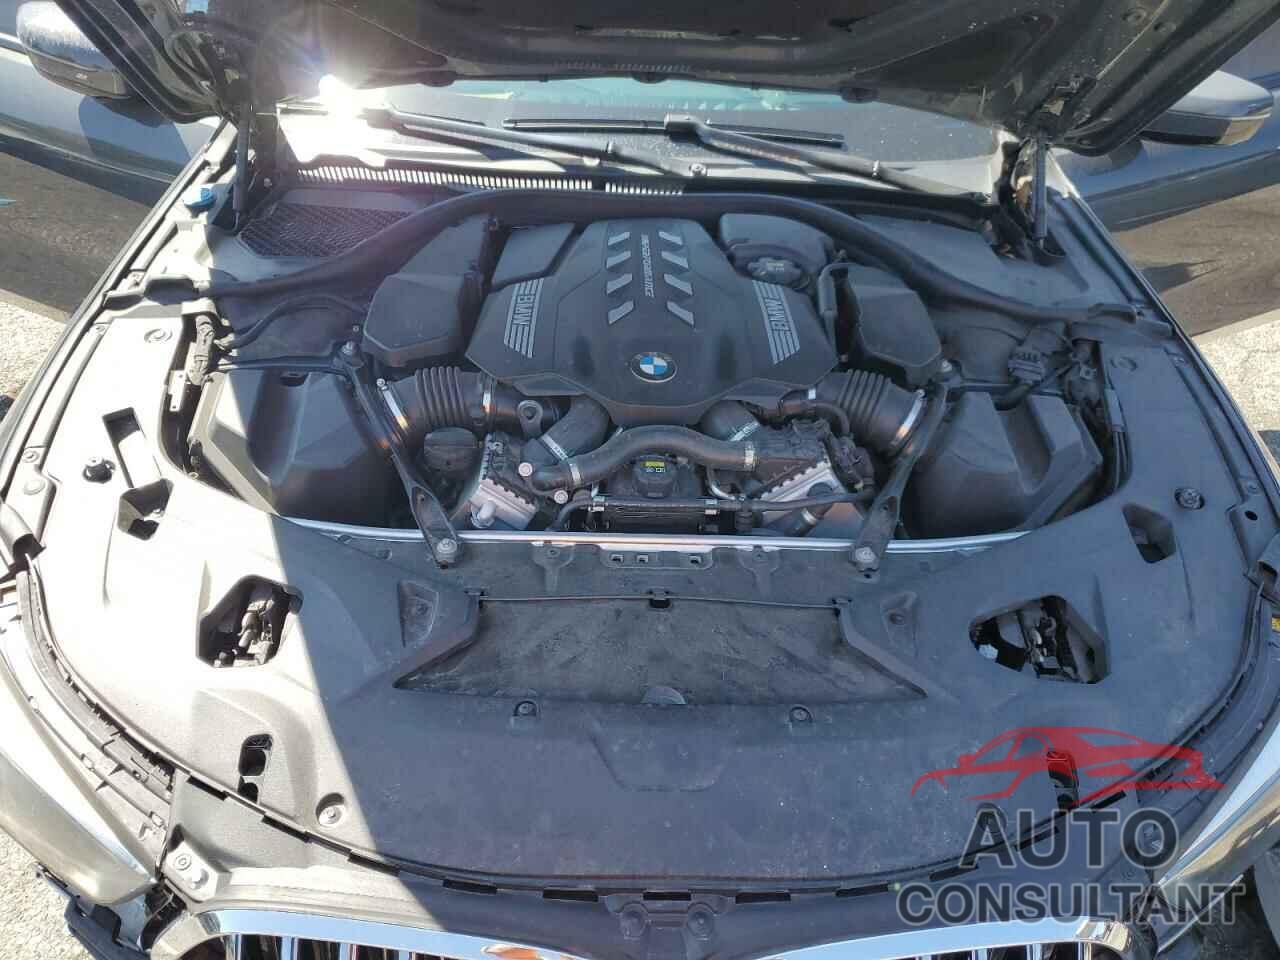 BMW M8 2020 - WBAGV8C07LCE18973